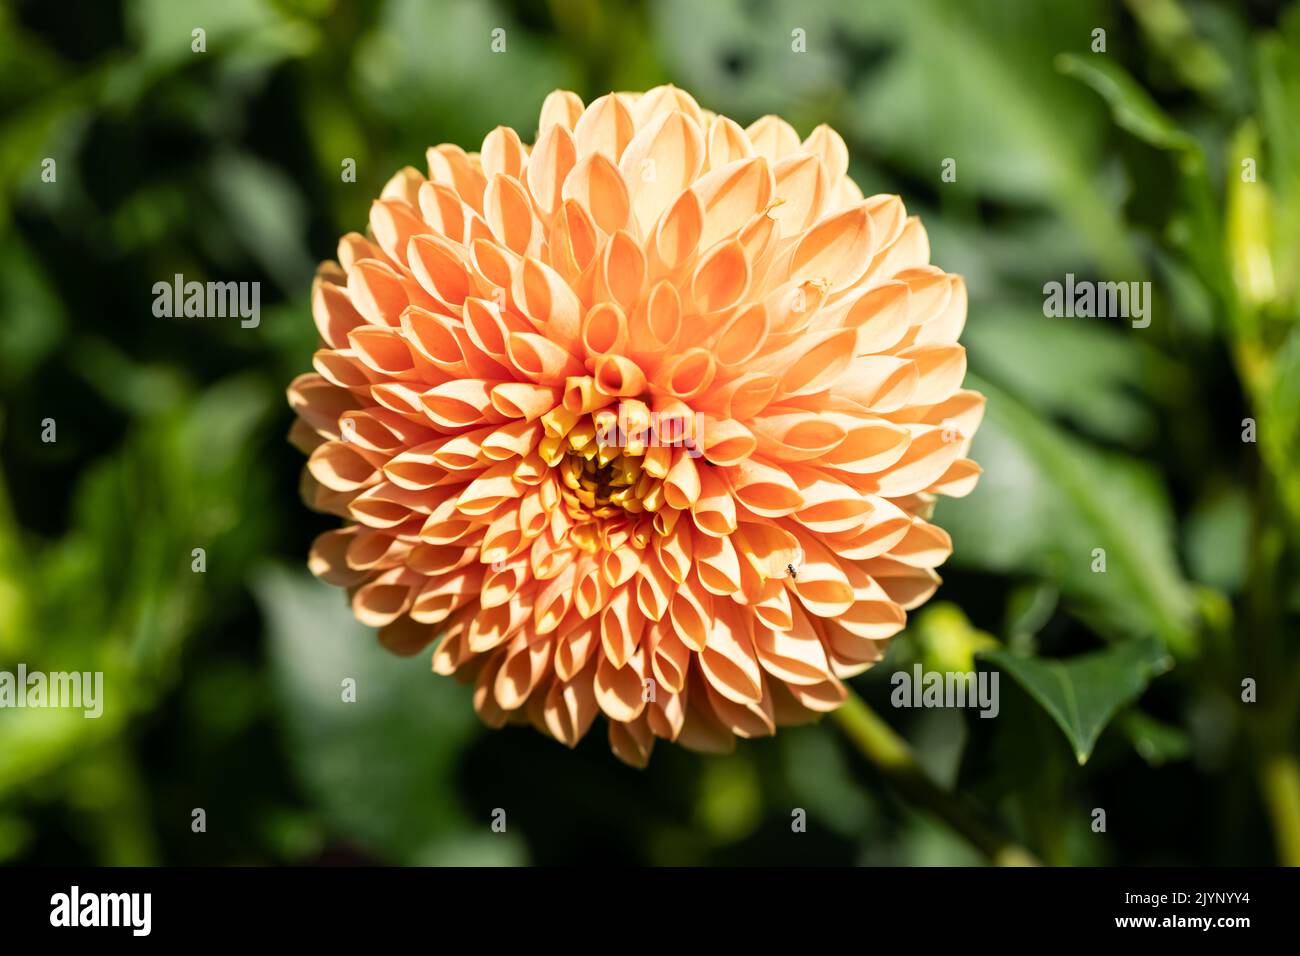 Albaricoque bola de color flor de Dahlia primer plano Foto de stock